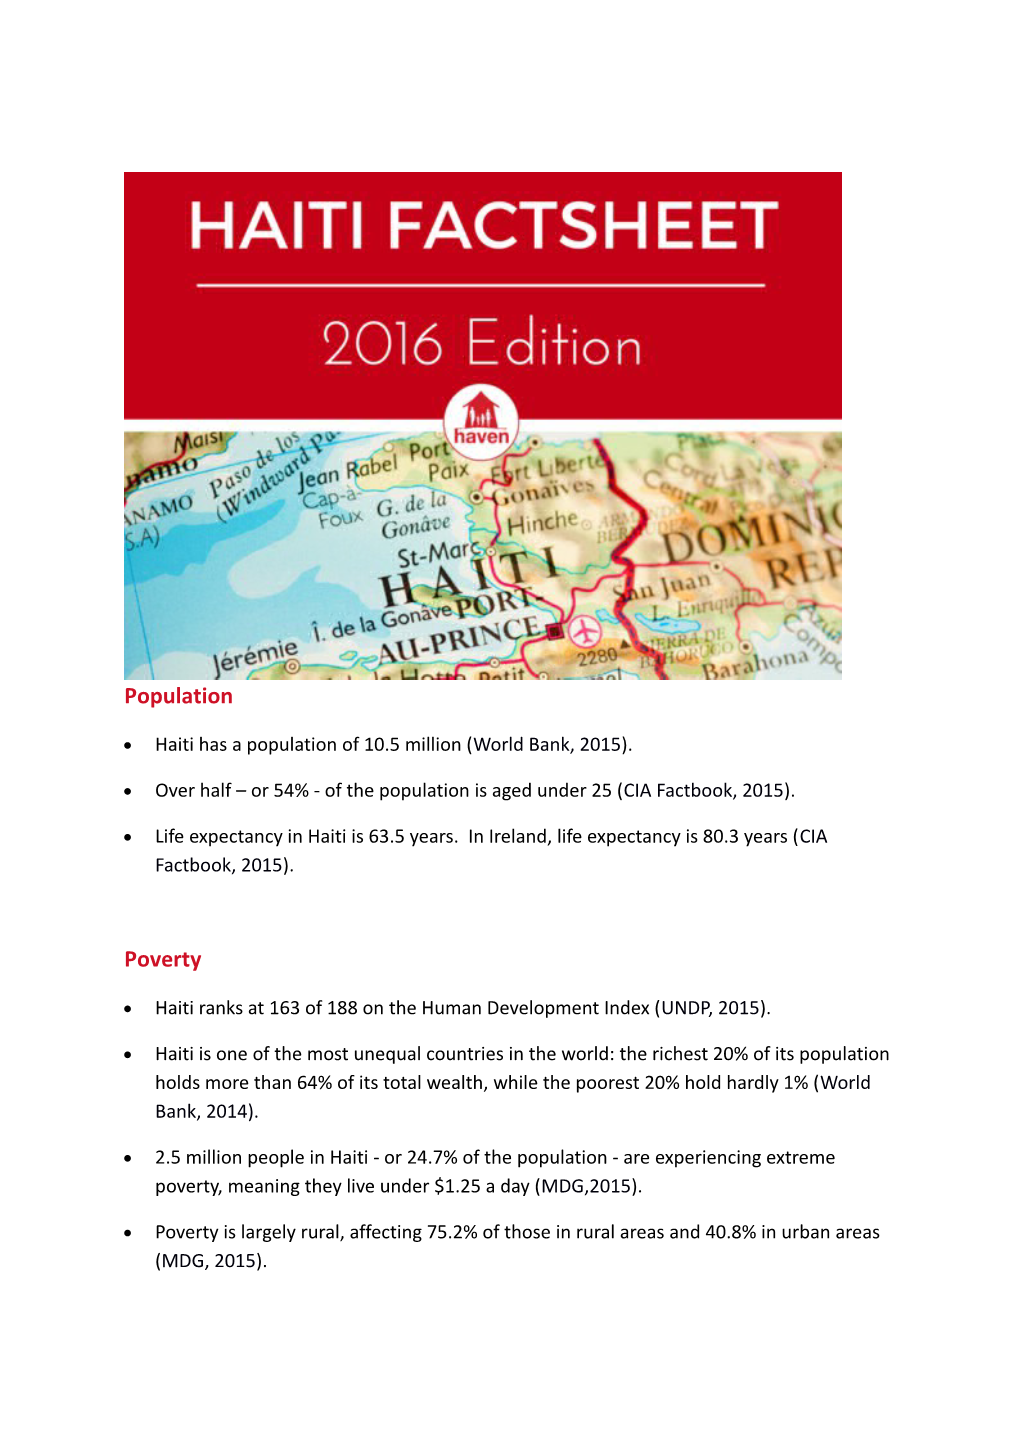 Haiti Has a Population of 10.5 Million (World Bank, 2015)